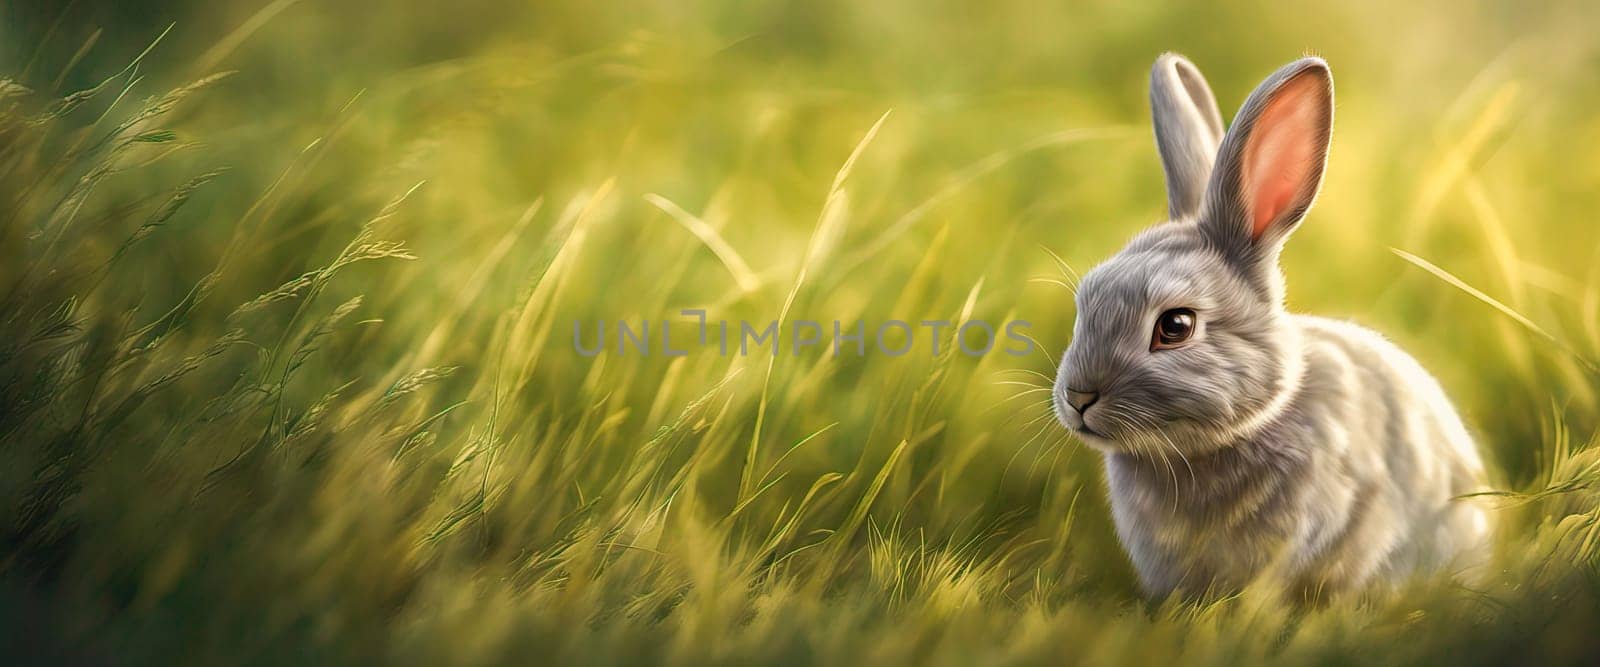 Banner Little rabbit on green grass in summer sunny day by EkaterinaPereslavtseva